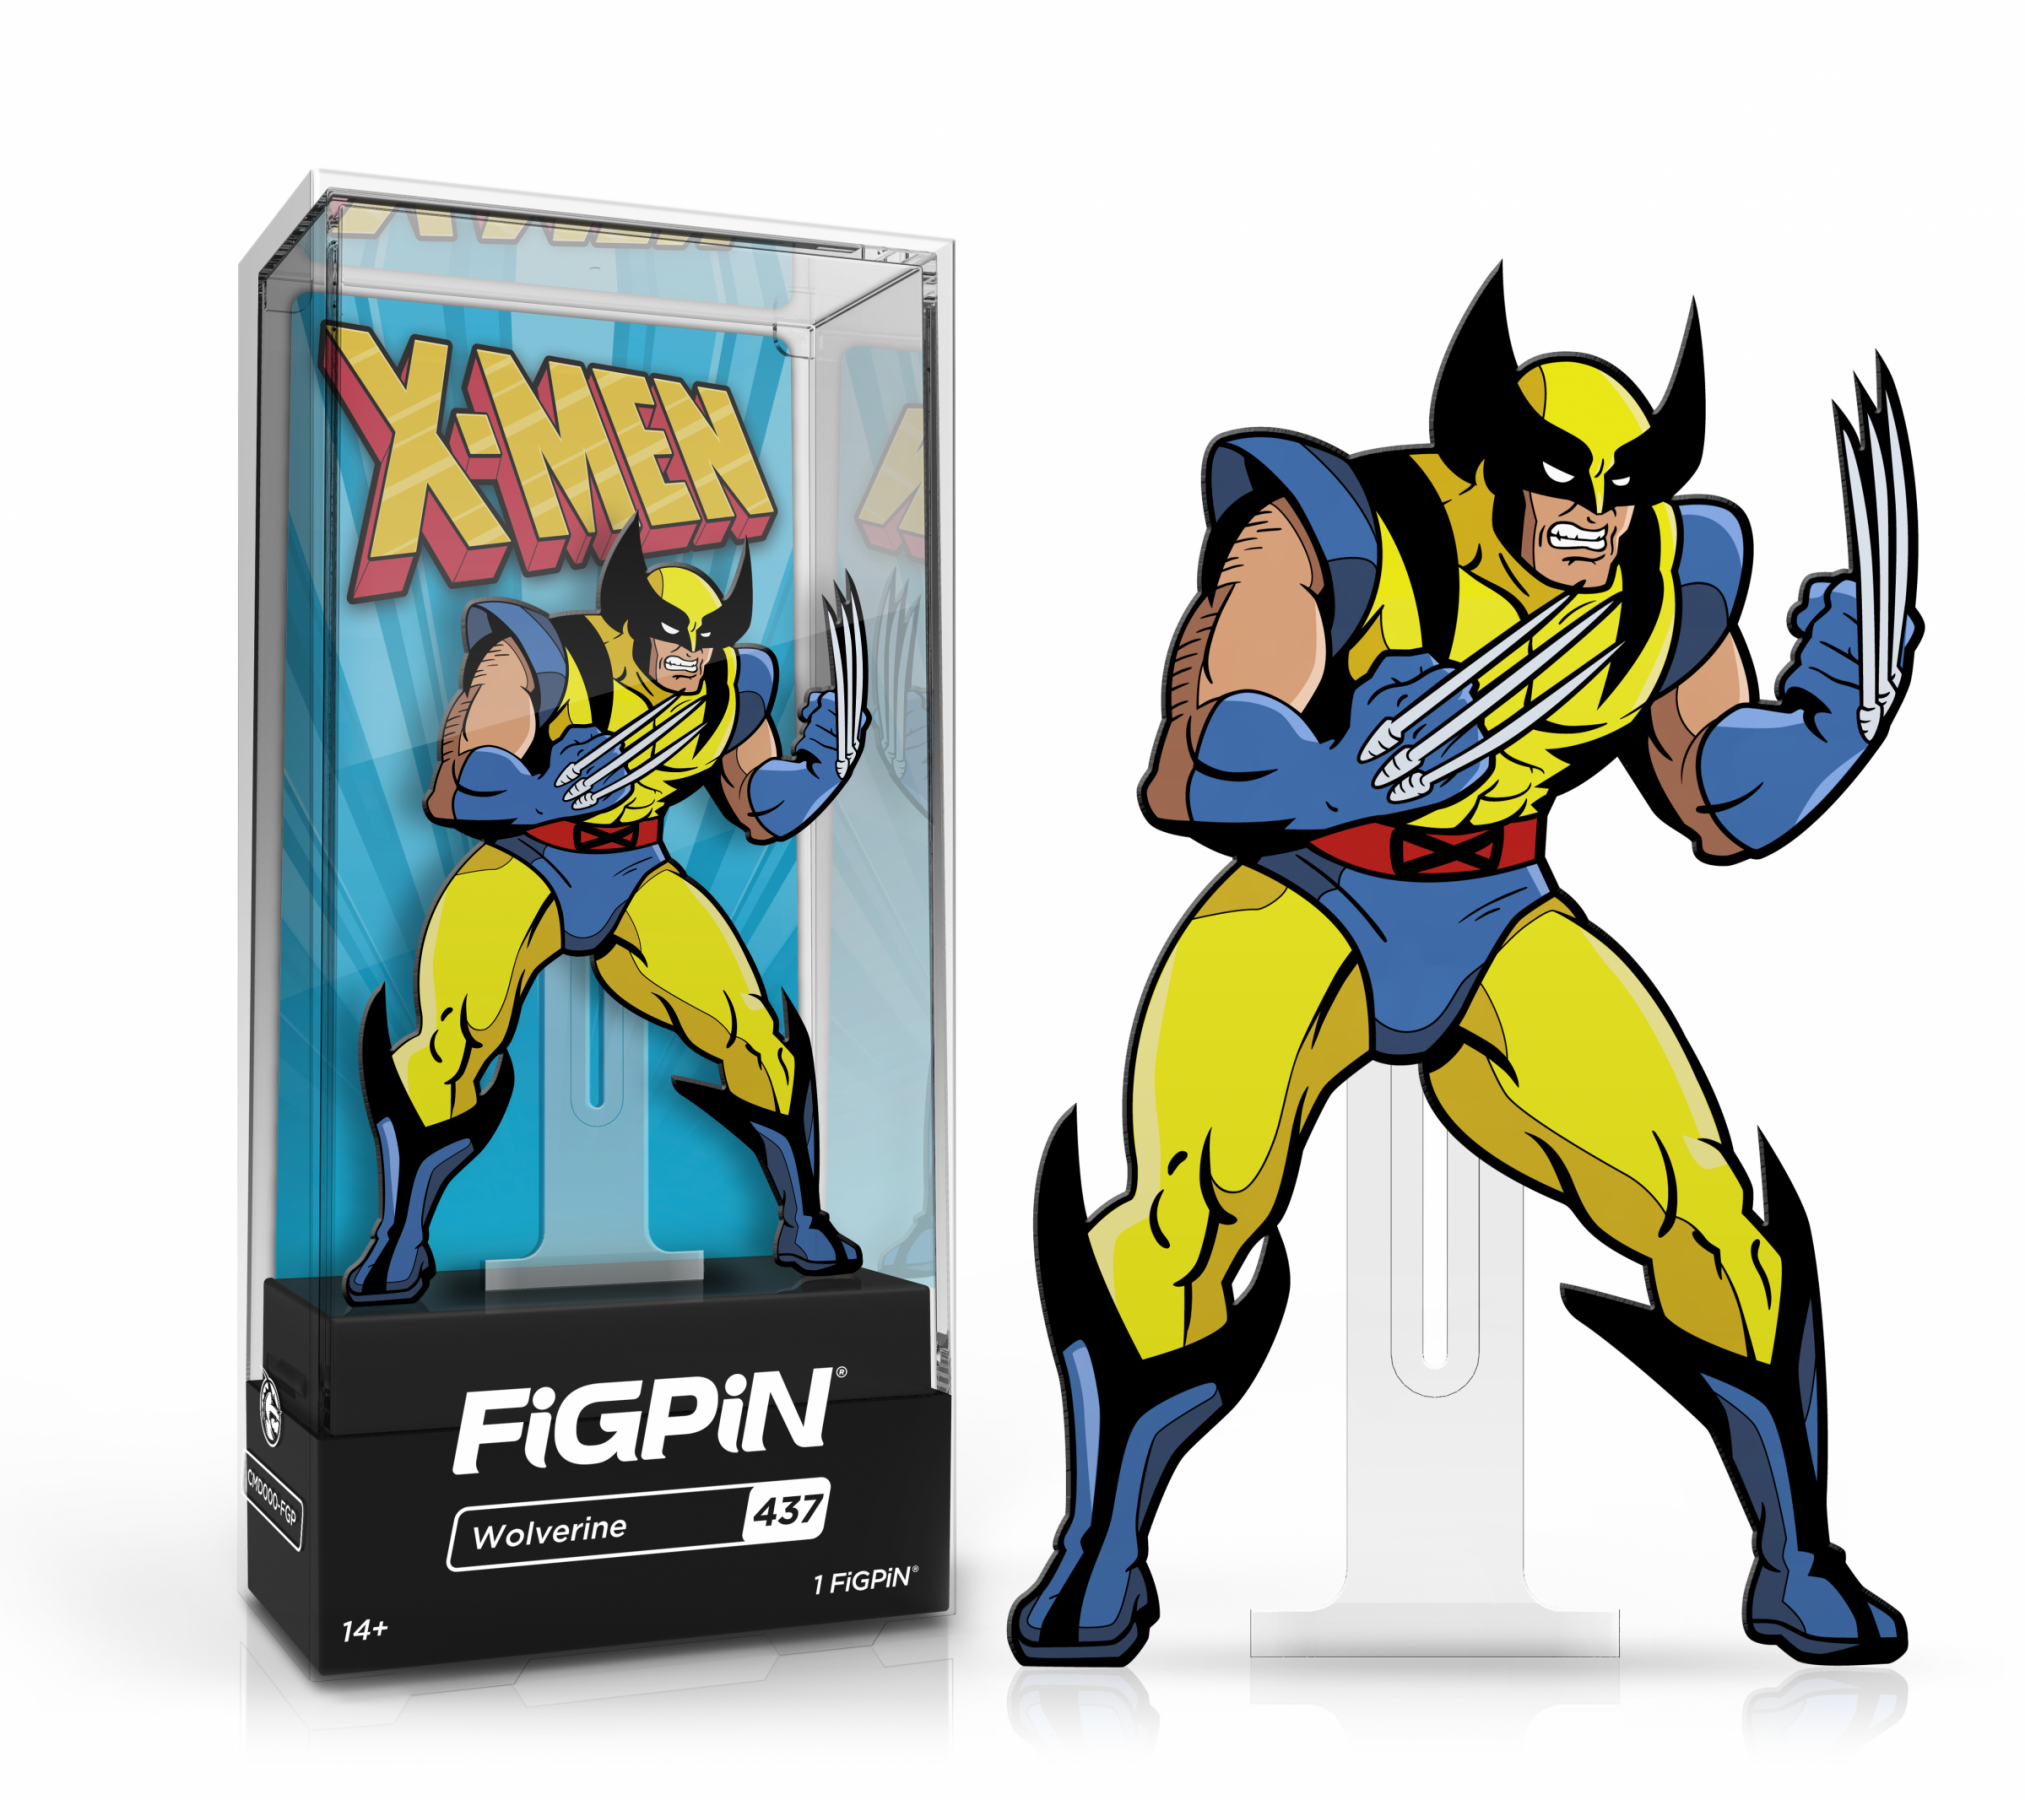 FiGPiN Wolverine (437) Collectable Enamel Pin MK1IJVV6RO |27867|